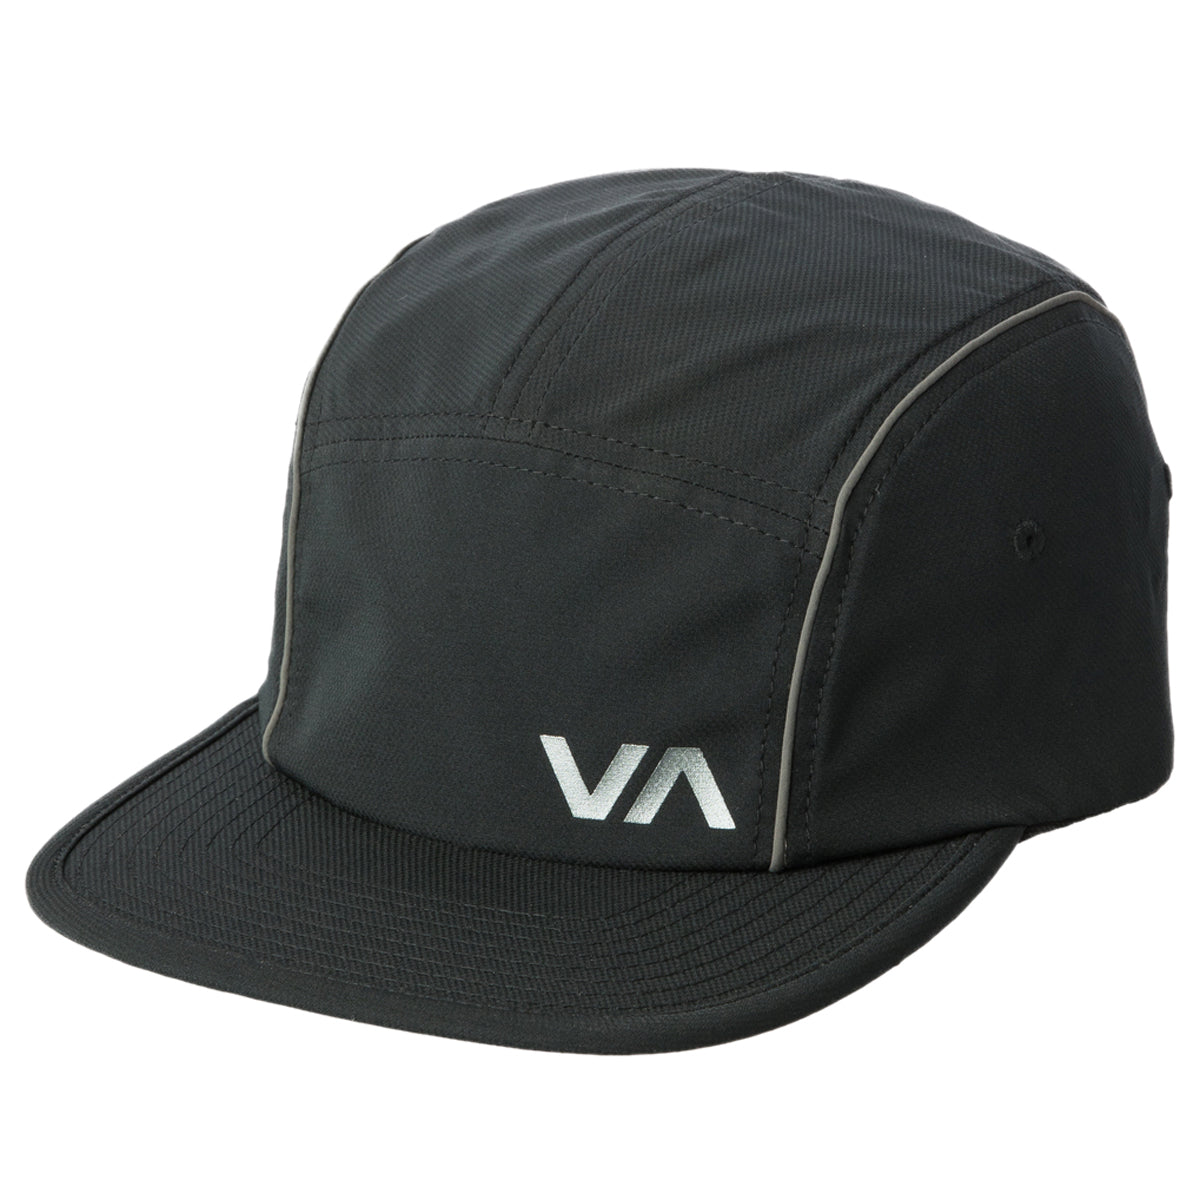 RVCA Yogger Hat - Black image 1